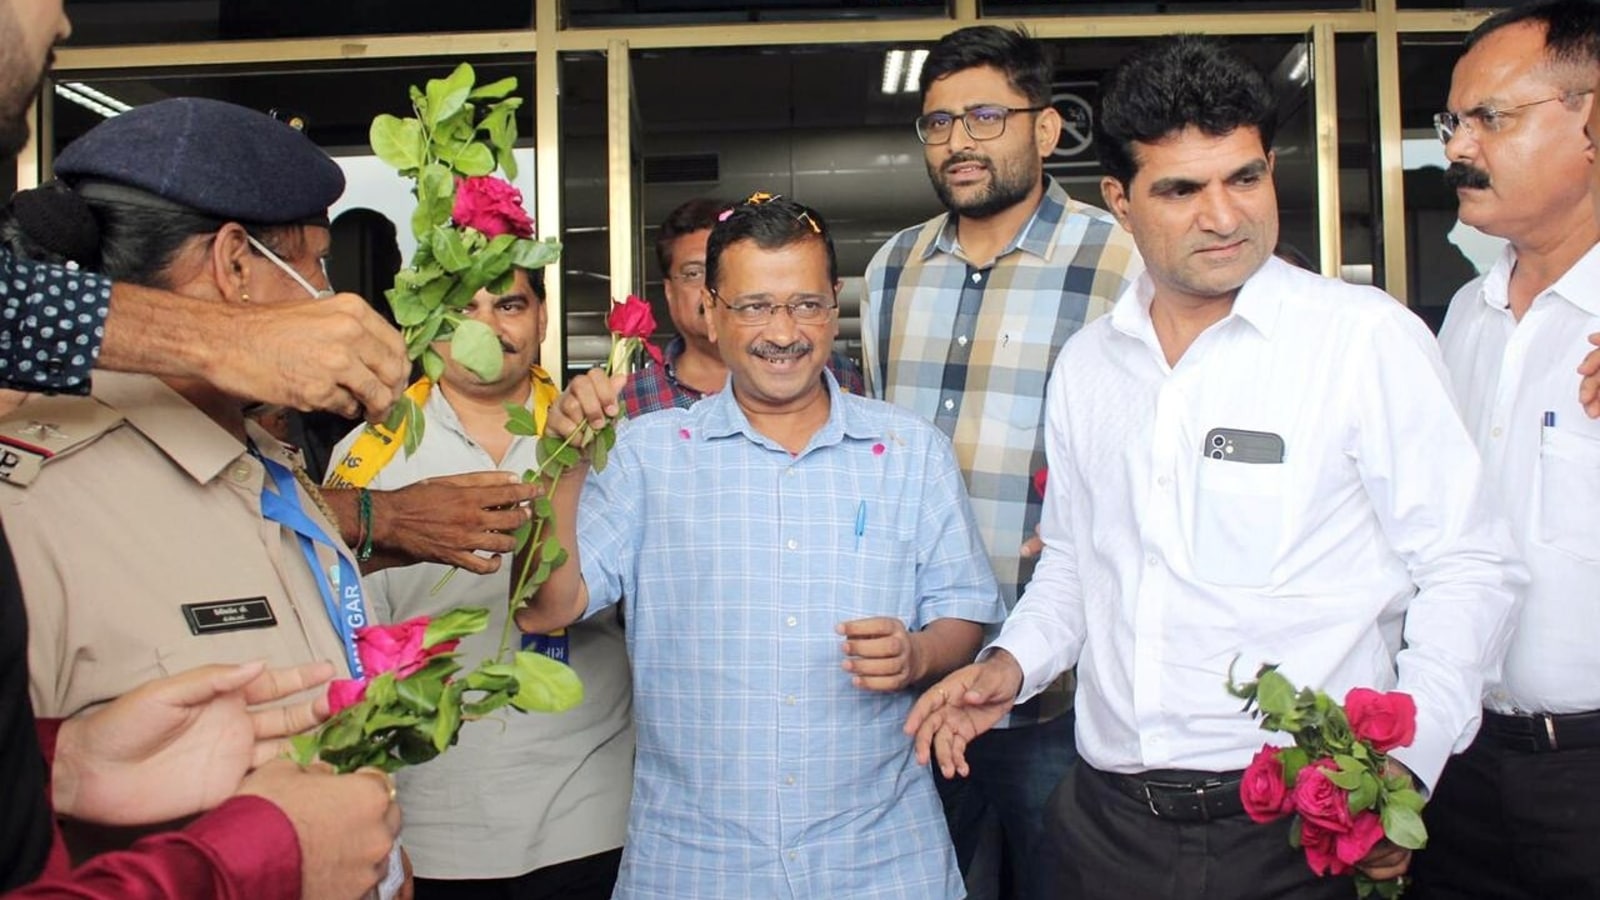 Ahead of Gujarat polls, Arvind Kejriwal promises 24x7 power supply, jobs |  Latest News India - Hindustan Times